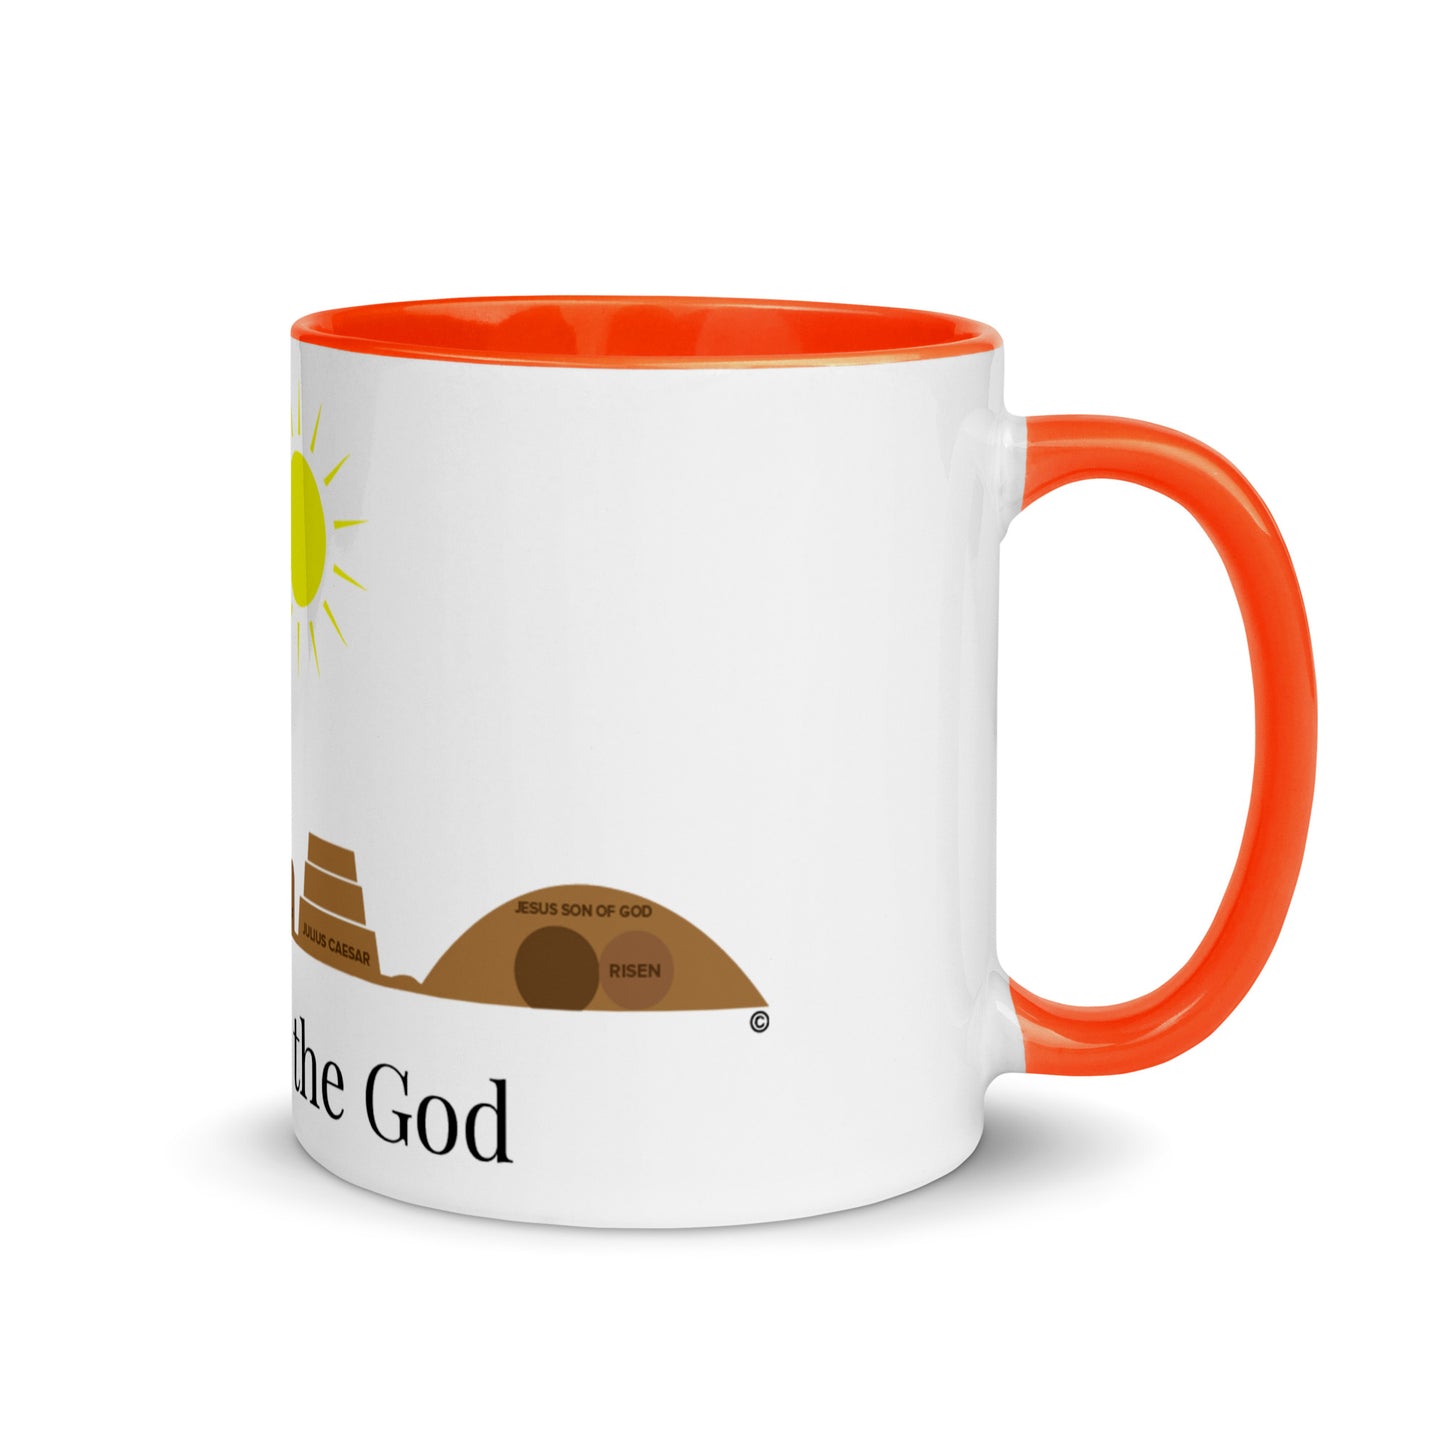 Gods and the God Mug with Color Inside